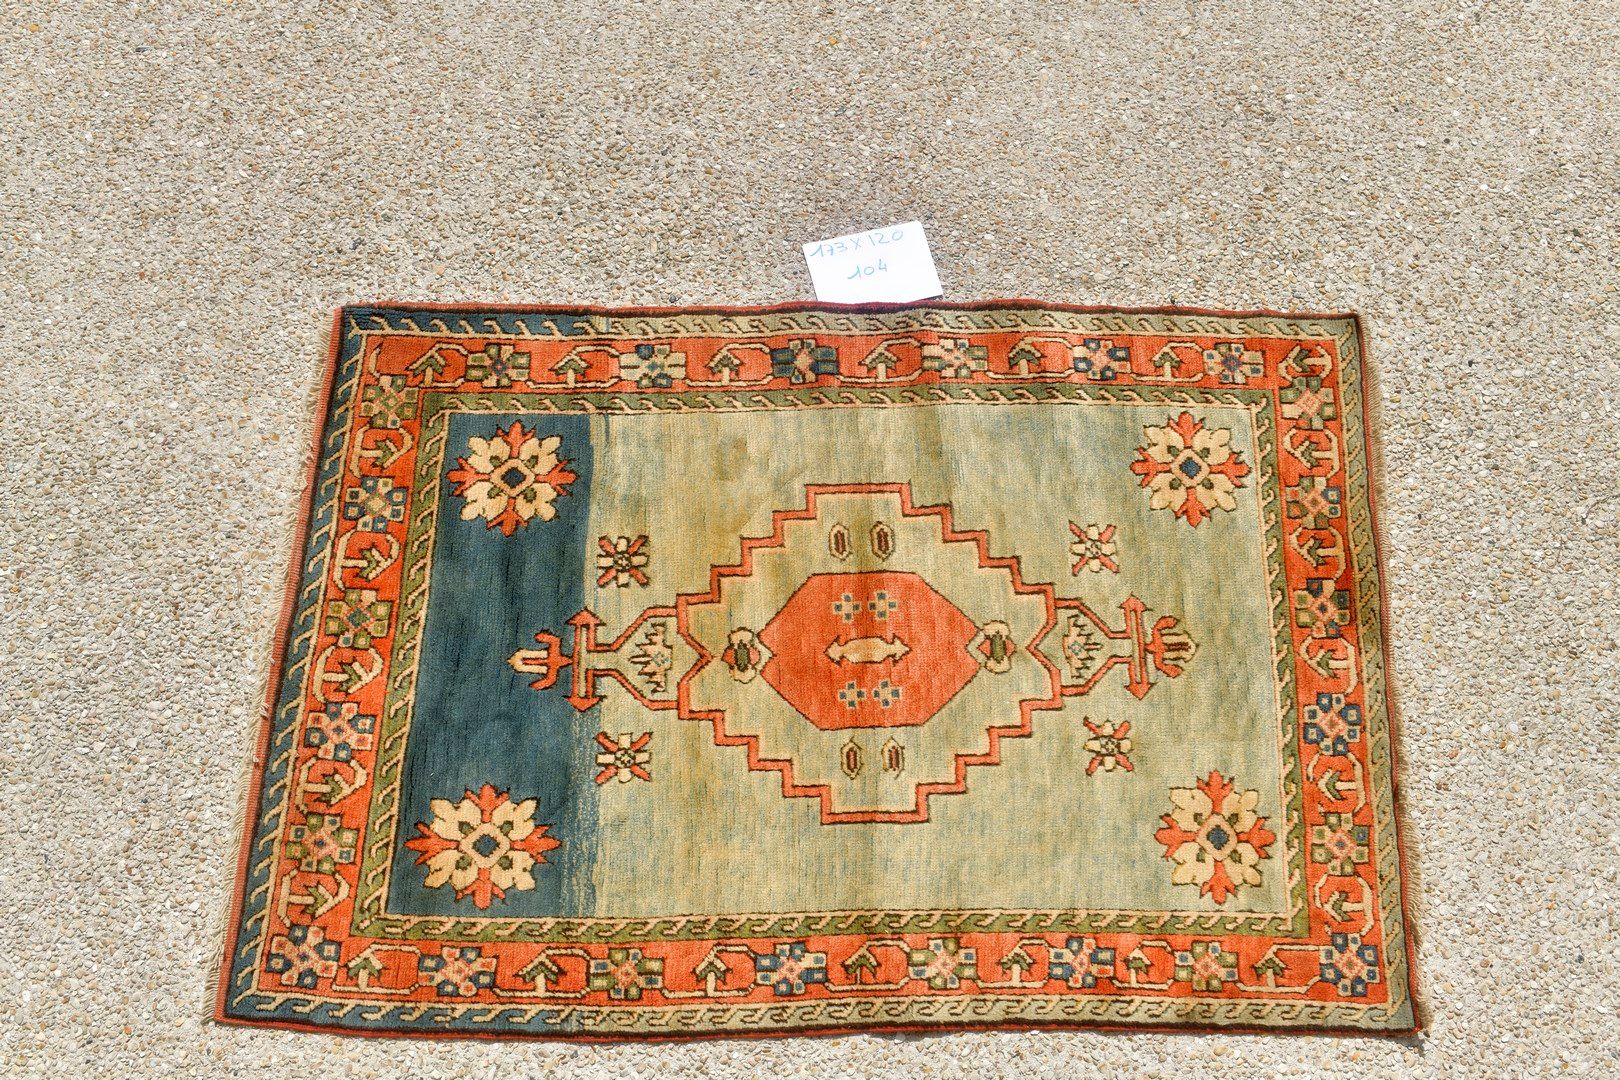 Null 科尼亚（土耳其），1980年。

羊毛基础上的羊毛丝绒。

磨光的青瓷绿地上有几何装饰。

状况良好。

173 x 120 cm